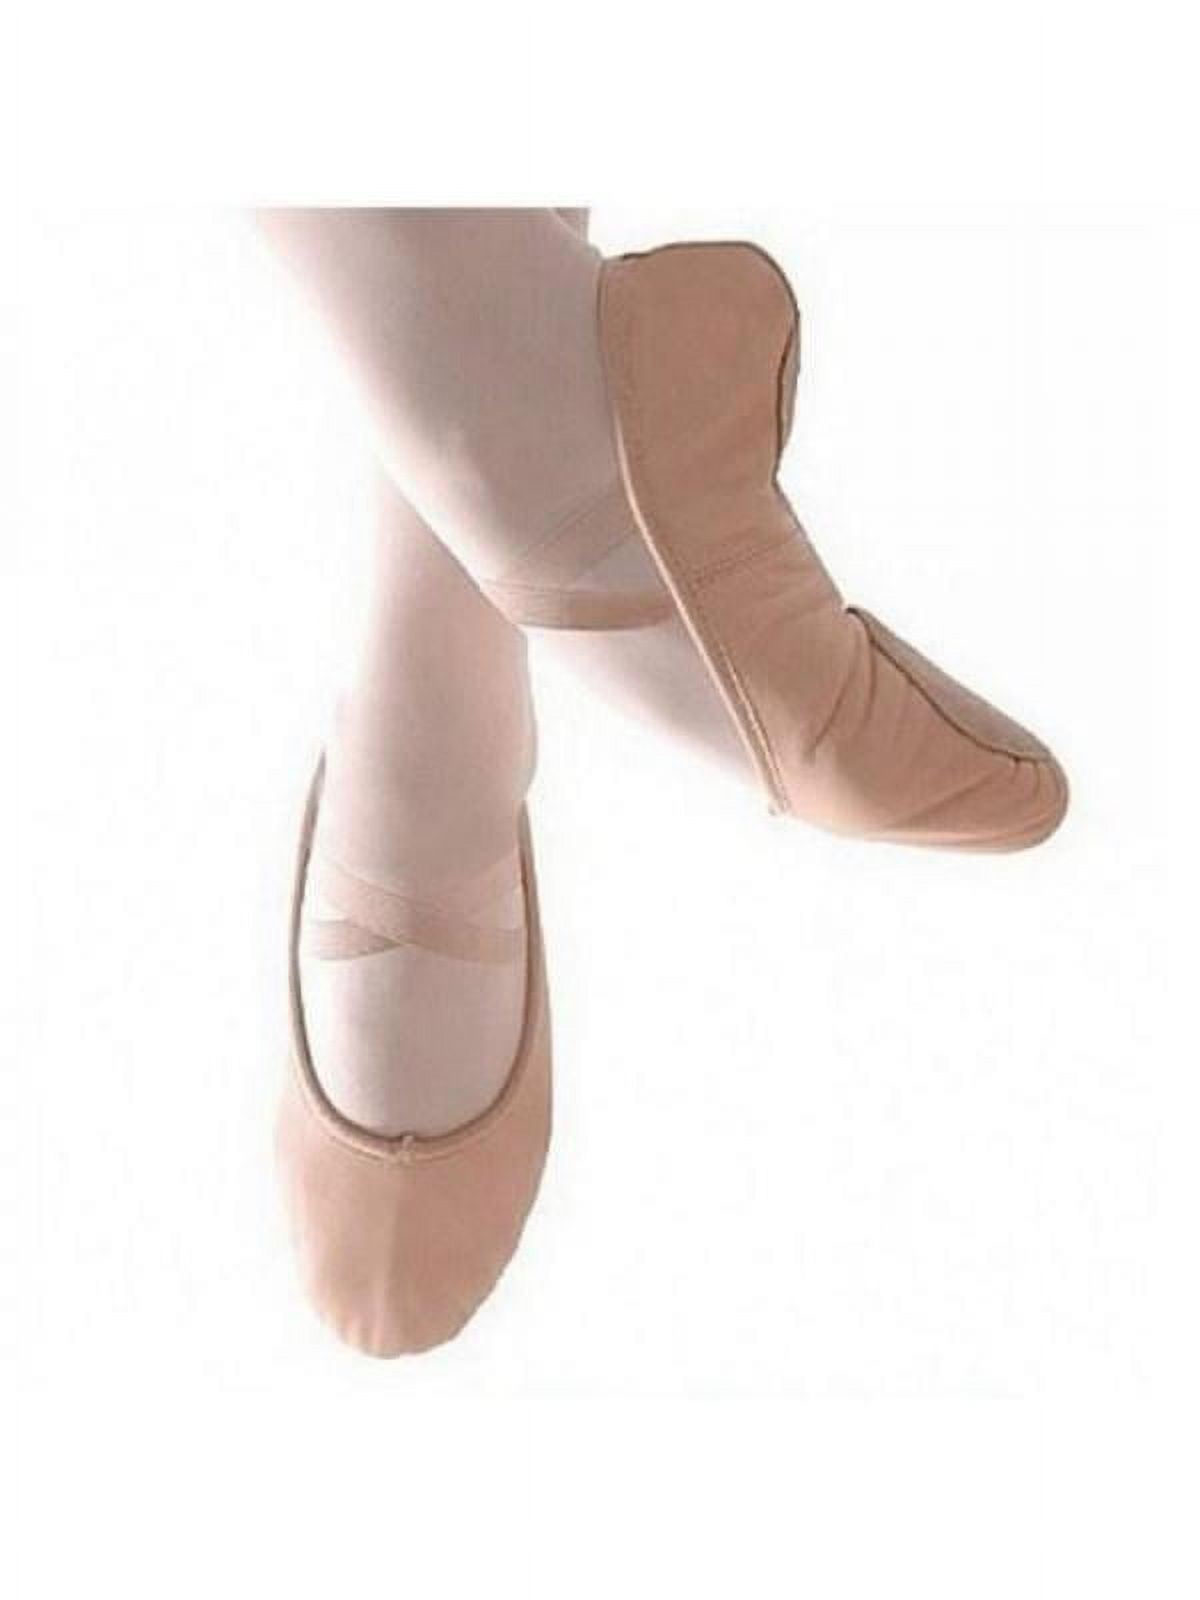 Children Adults Canvas Ballet Dance Shoes Split Sole Pointe Slippers Dancing Shoes - image 1 of 2